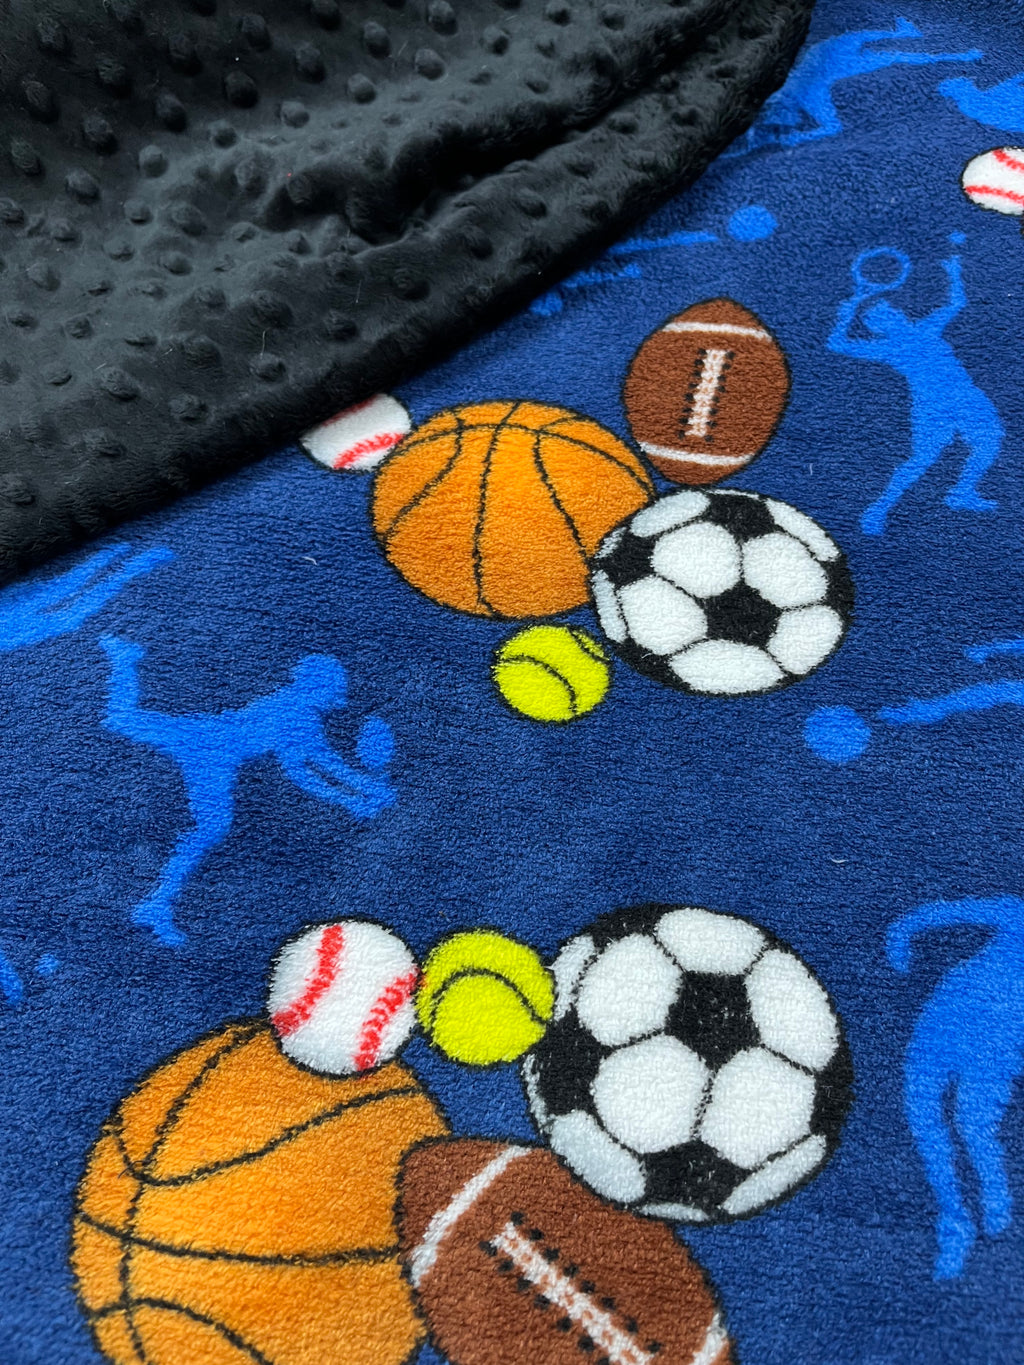 All Sports Football, Soccer, Basketball, Baseball, & Tennis Blanket - Choose backing